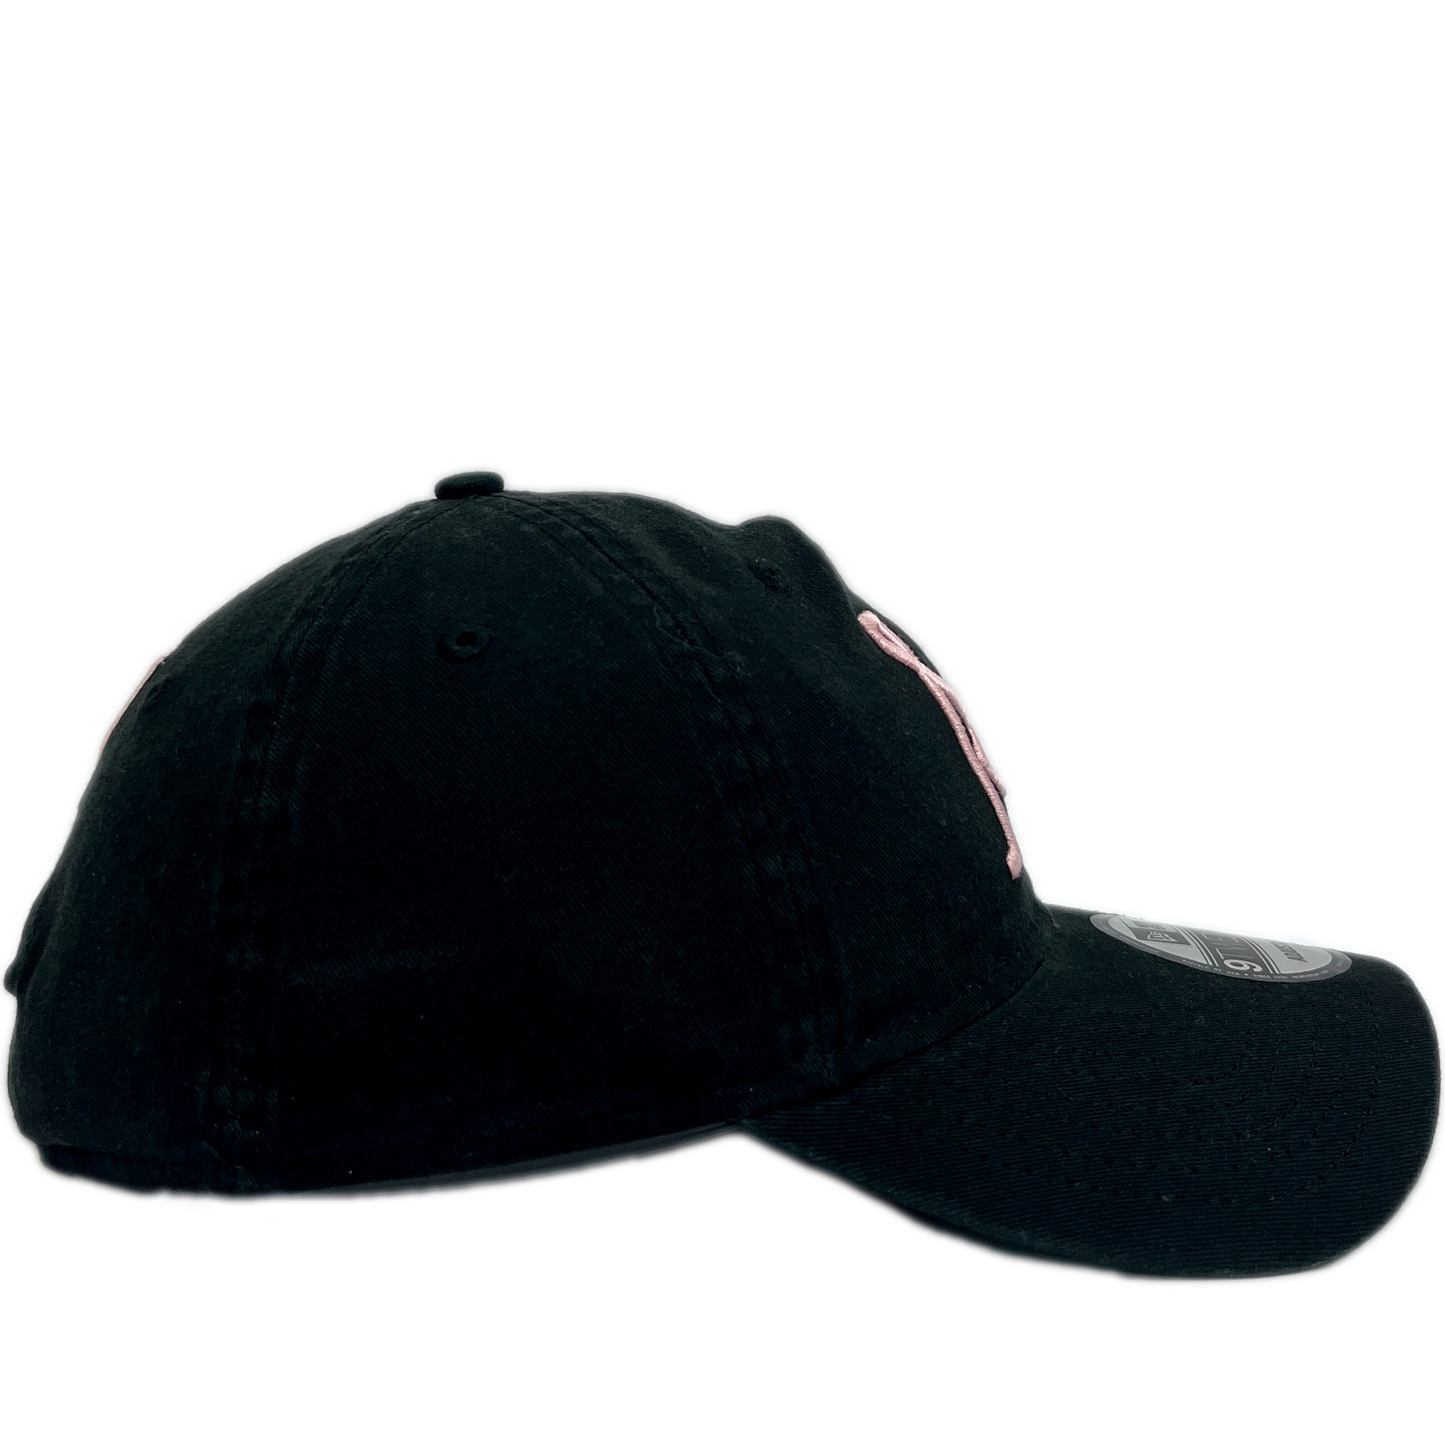 New Era Inter Miami 9TWENTY Adjustable Hat - Black/ Pink